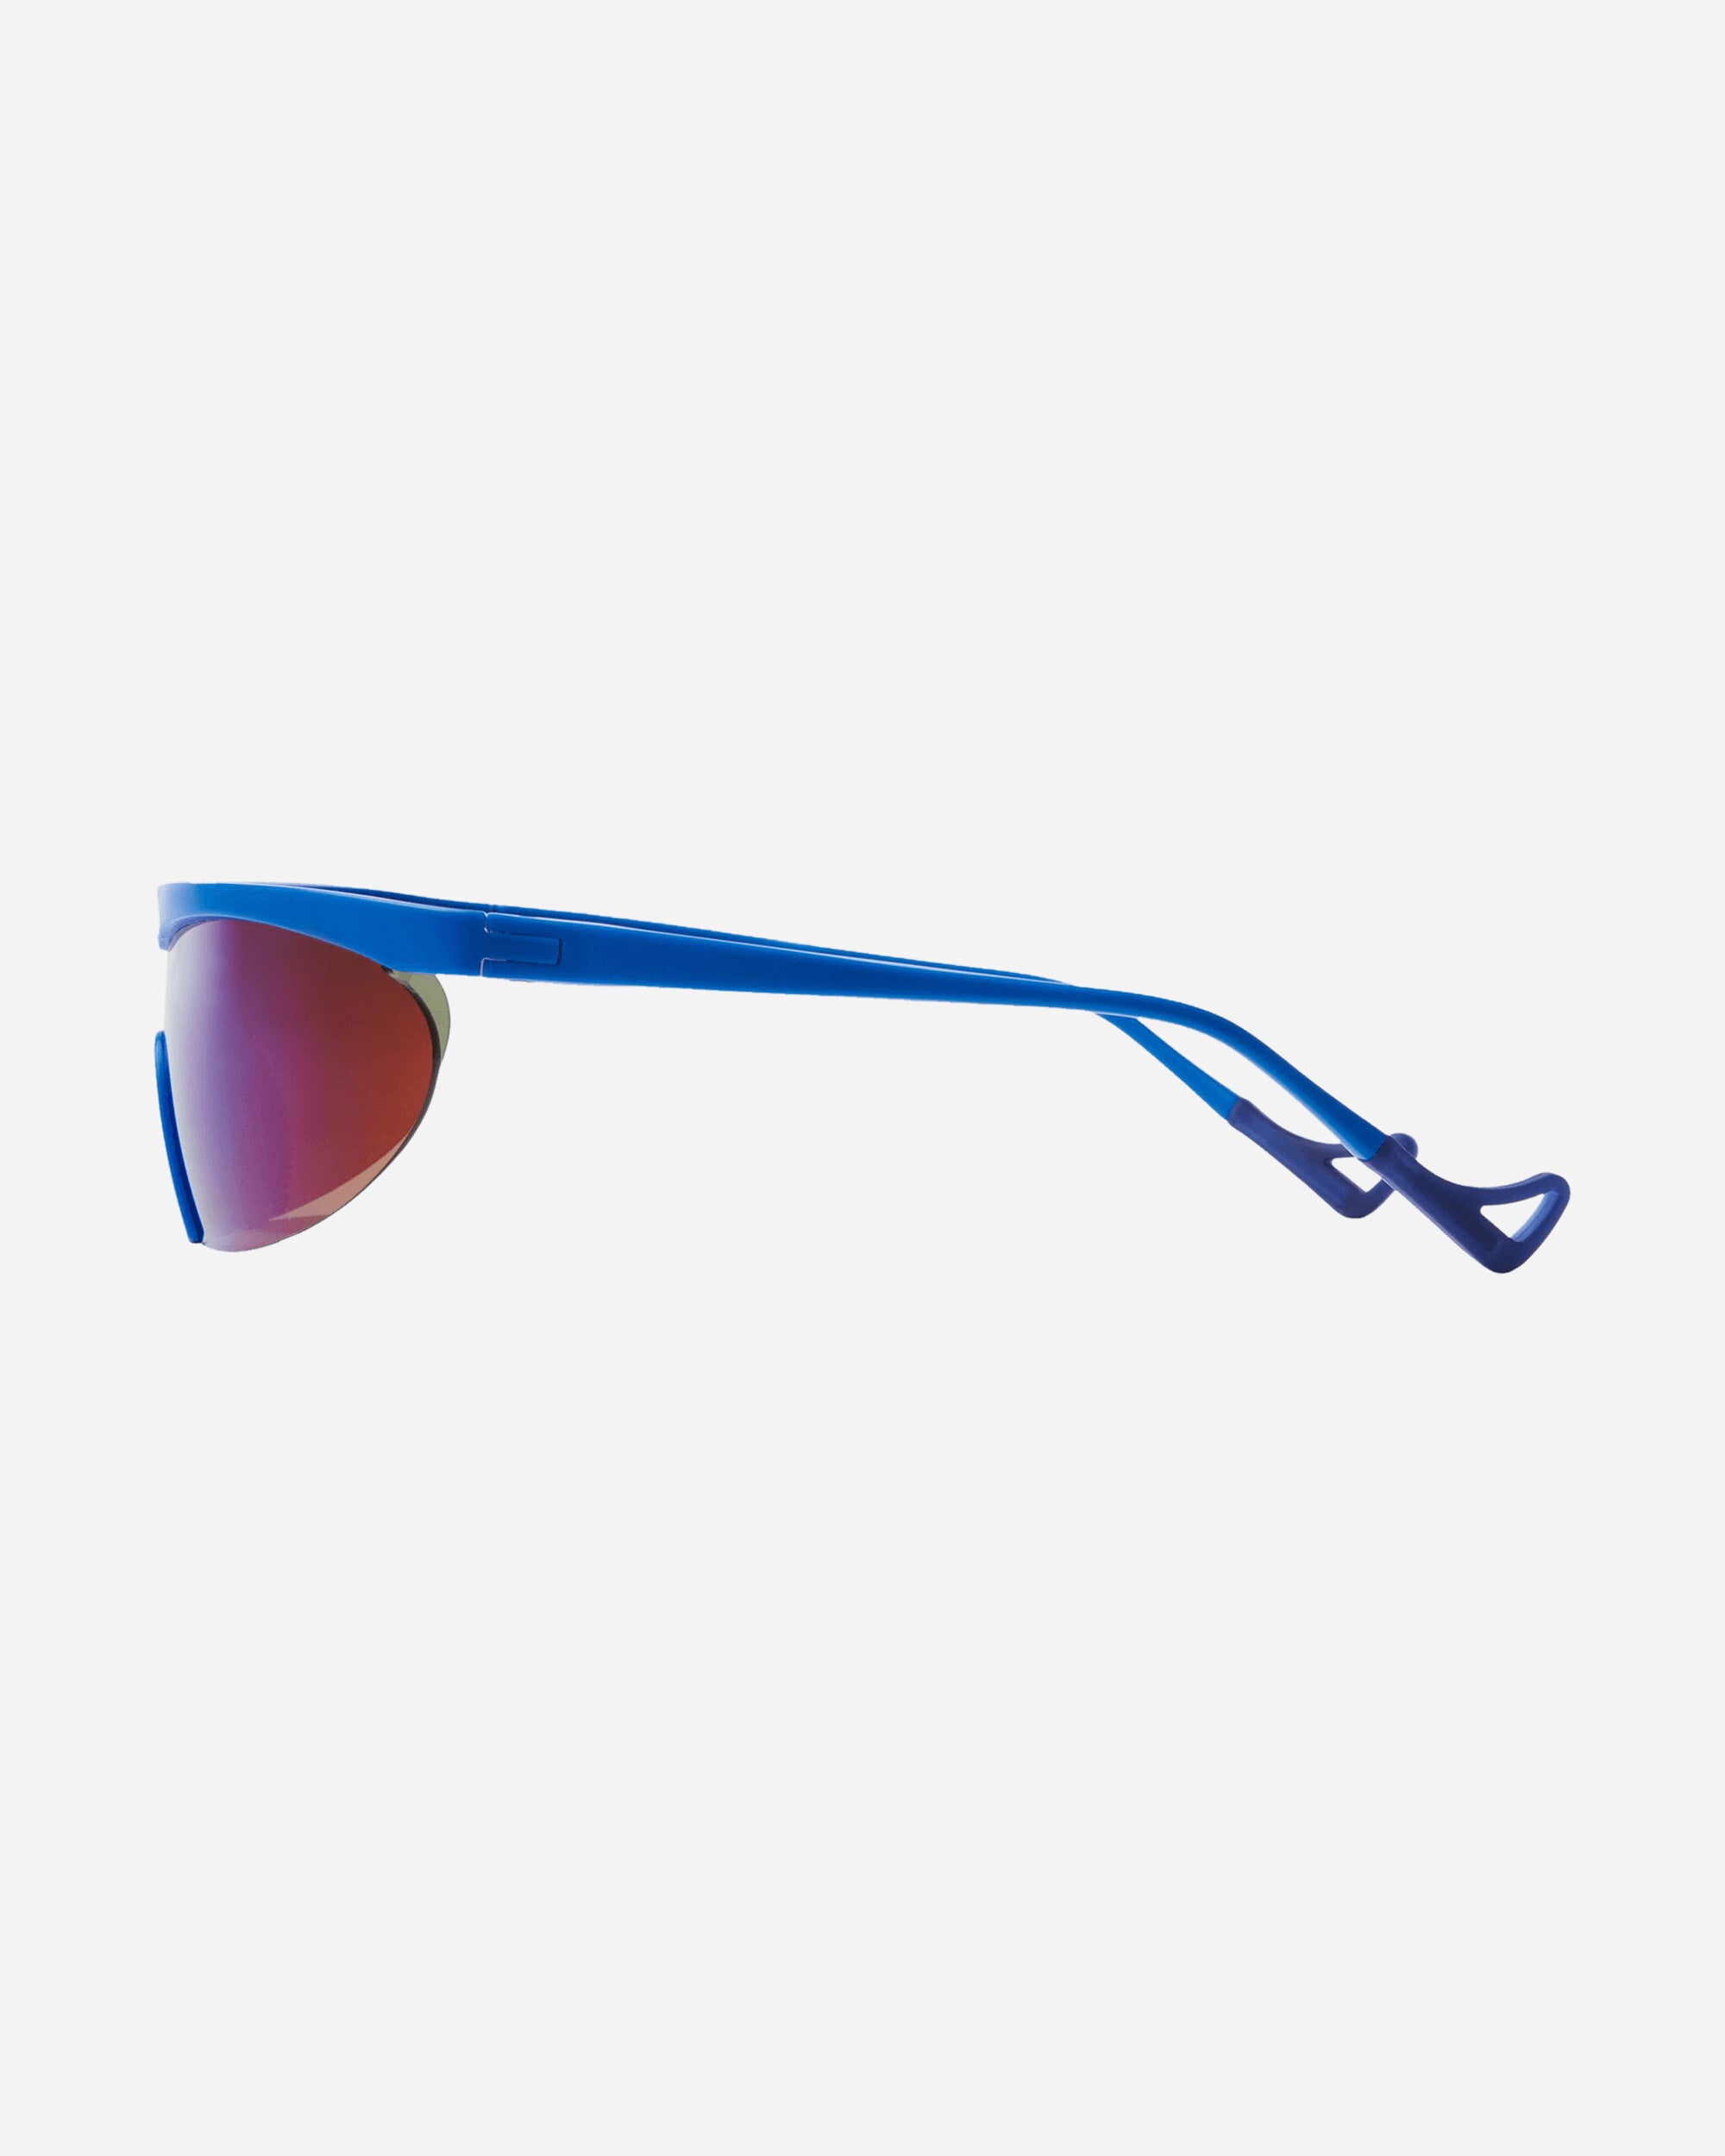 Koharu Eclipse Sunglasses Ocean Blue / Indigo